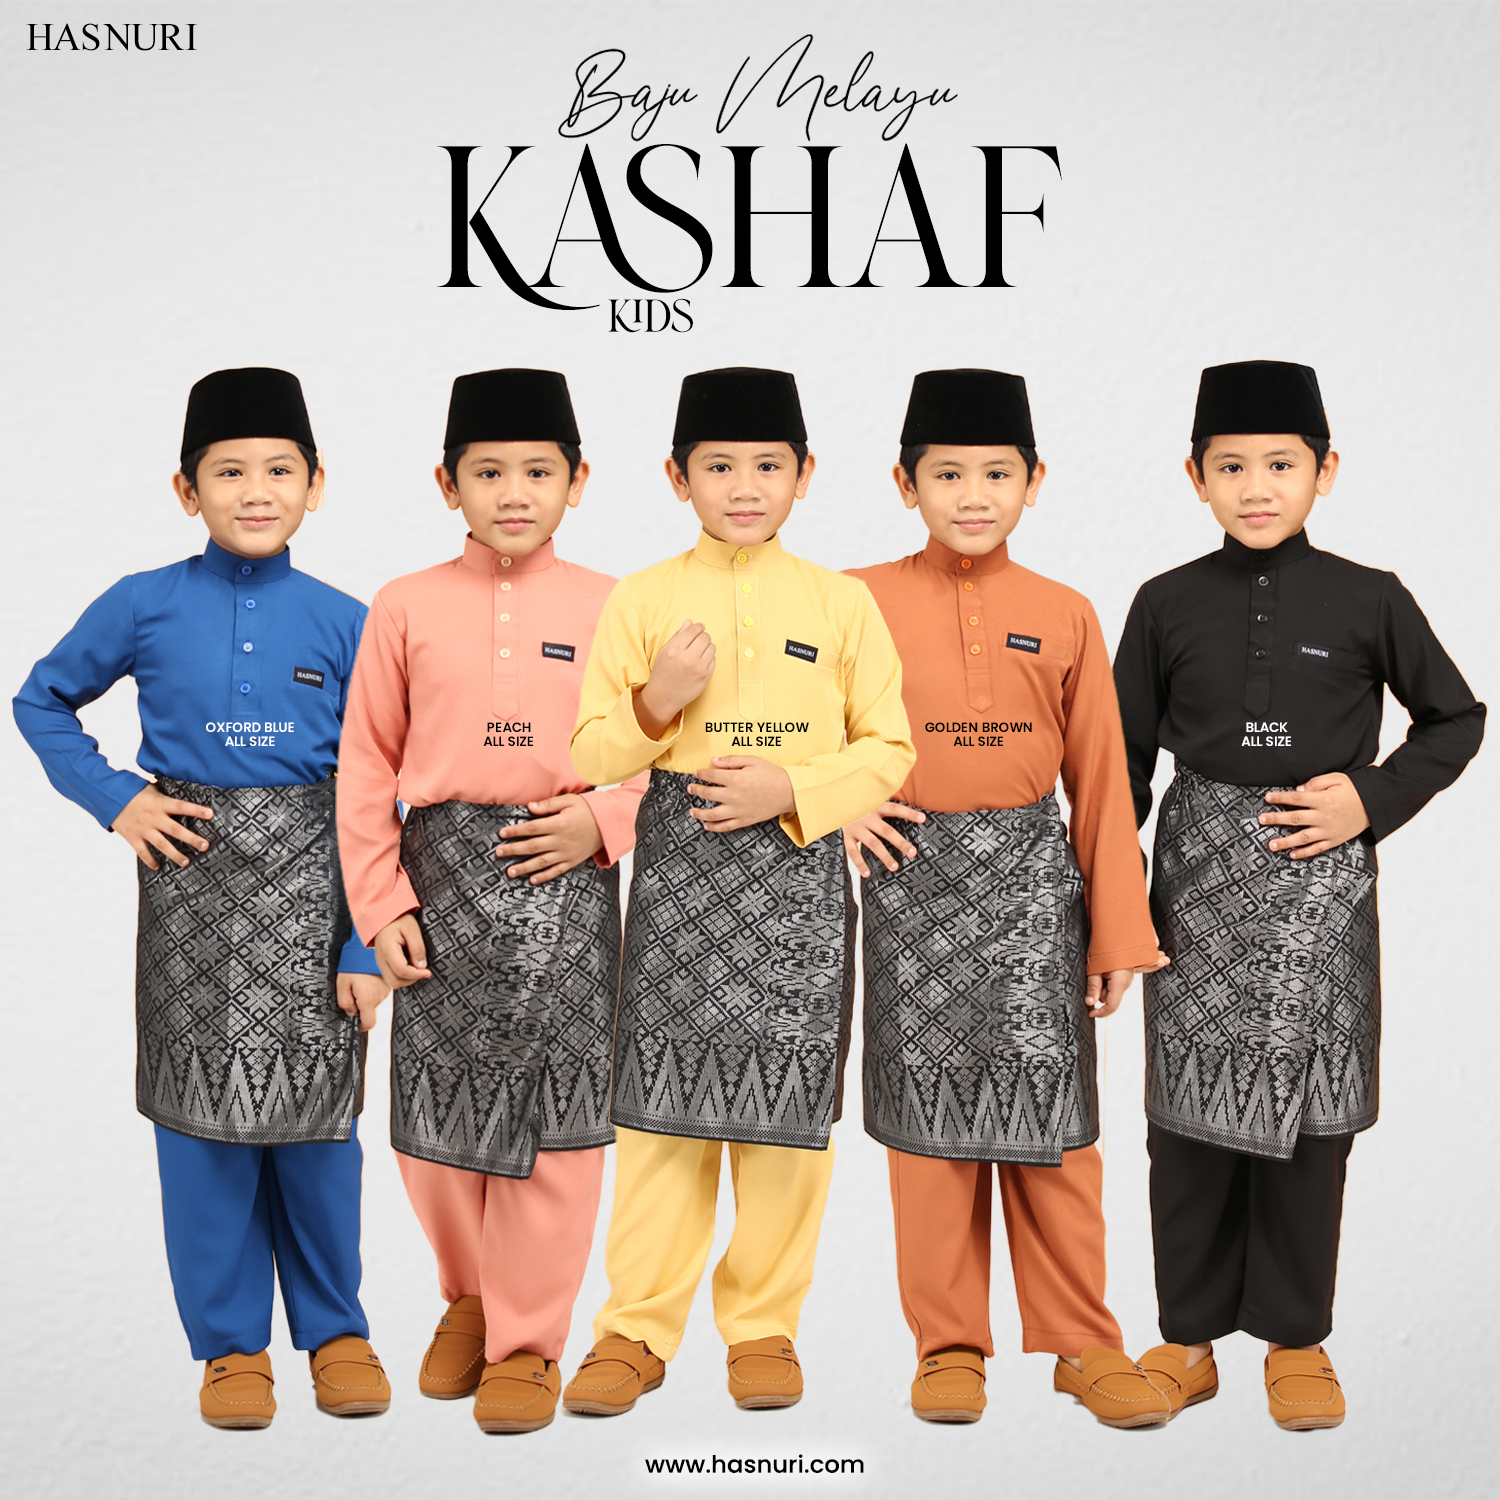 Baju Melayu Kashaf Kids - Peach